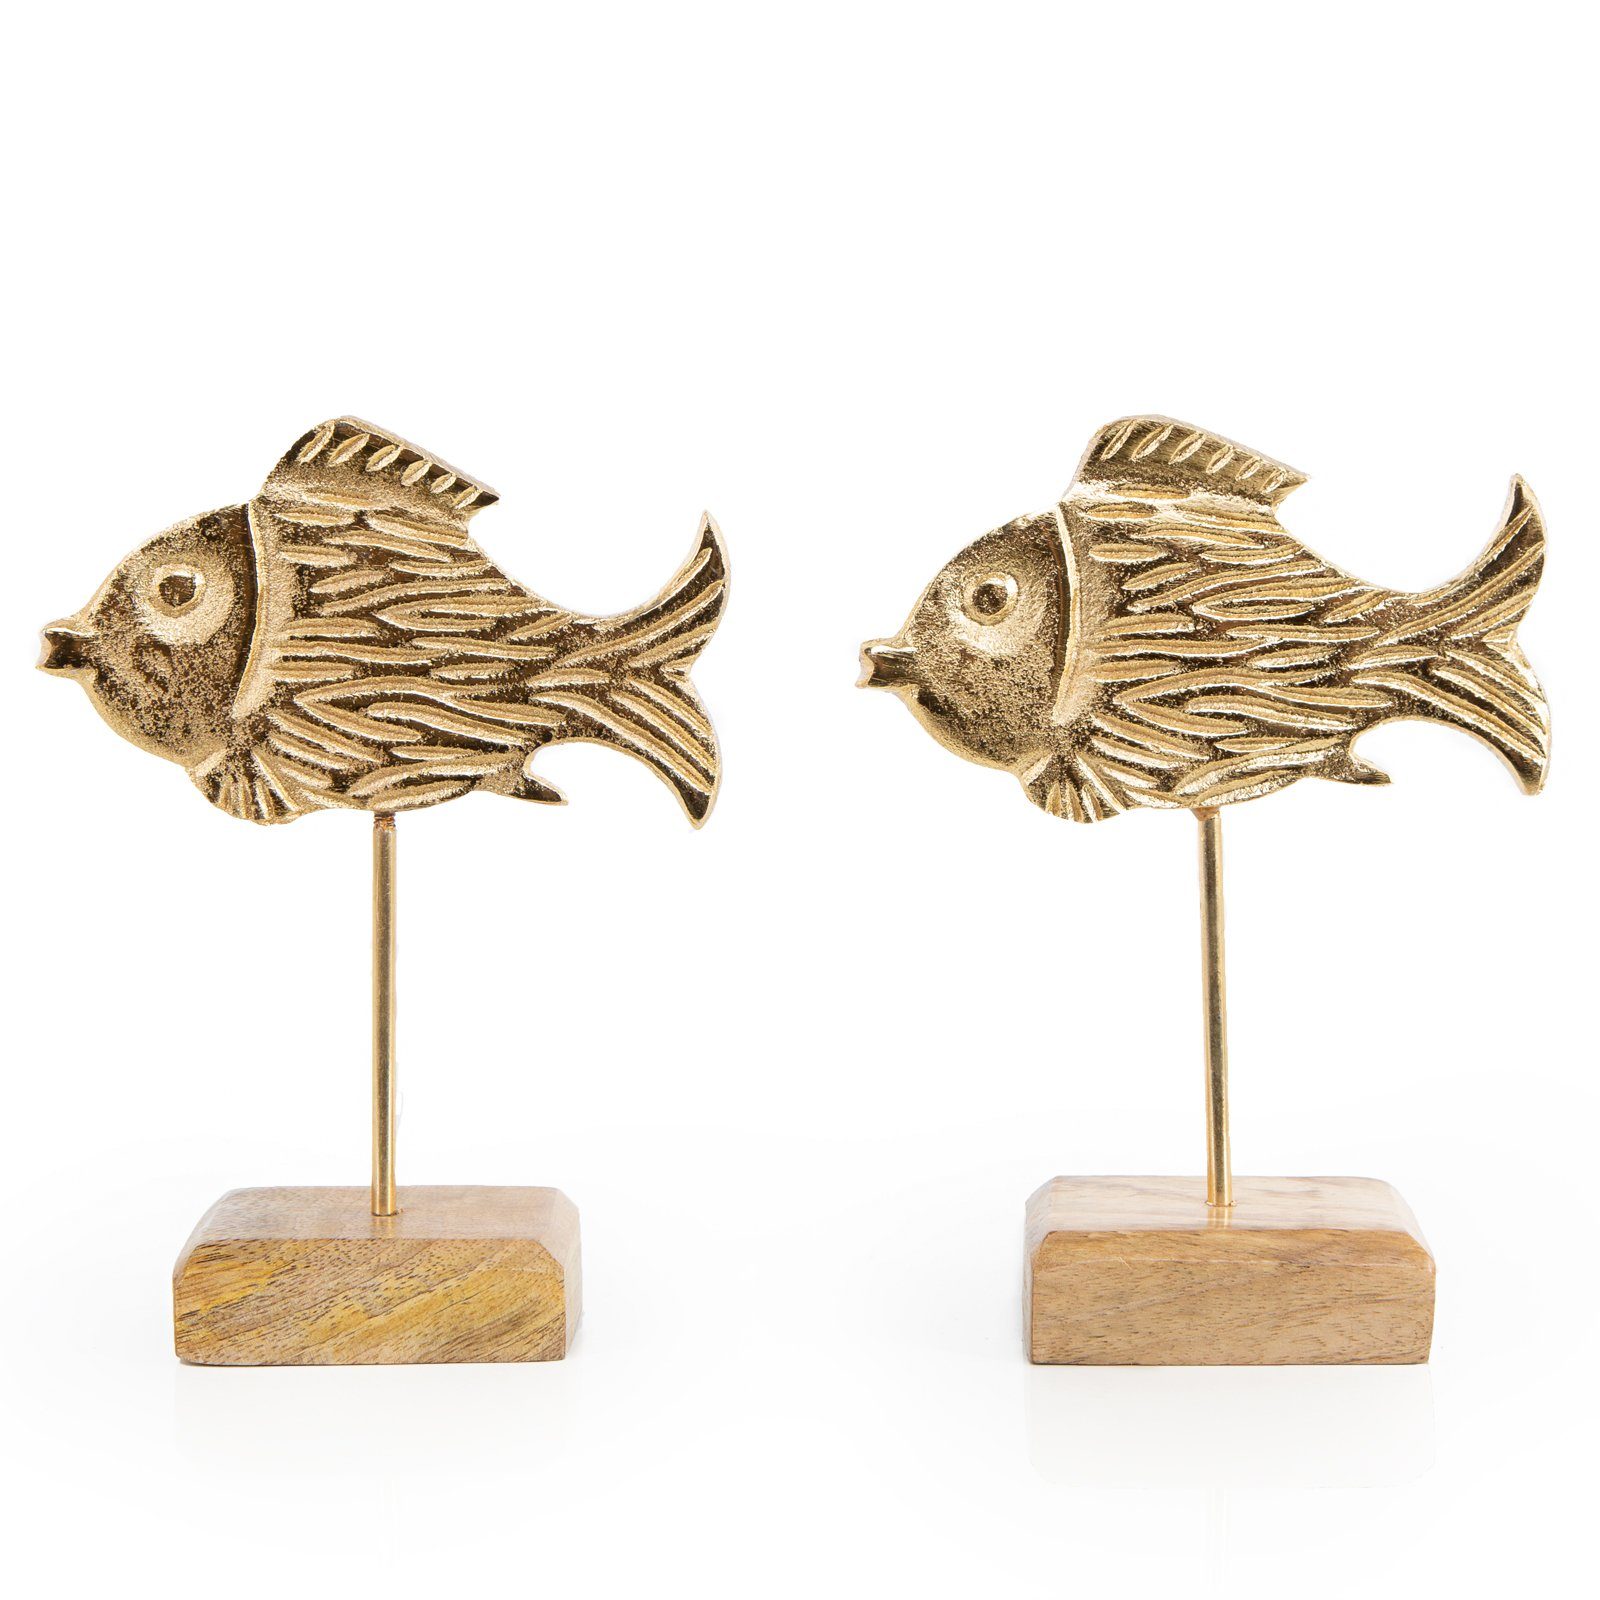 Metall Fische 2 18 goldfarben aus (Set, edle St), 2 Logbuch-Verlag cm Maritime lackiert Figuren Metall 2 Deko Dekofigur Figuren